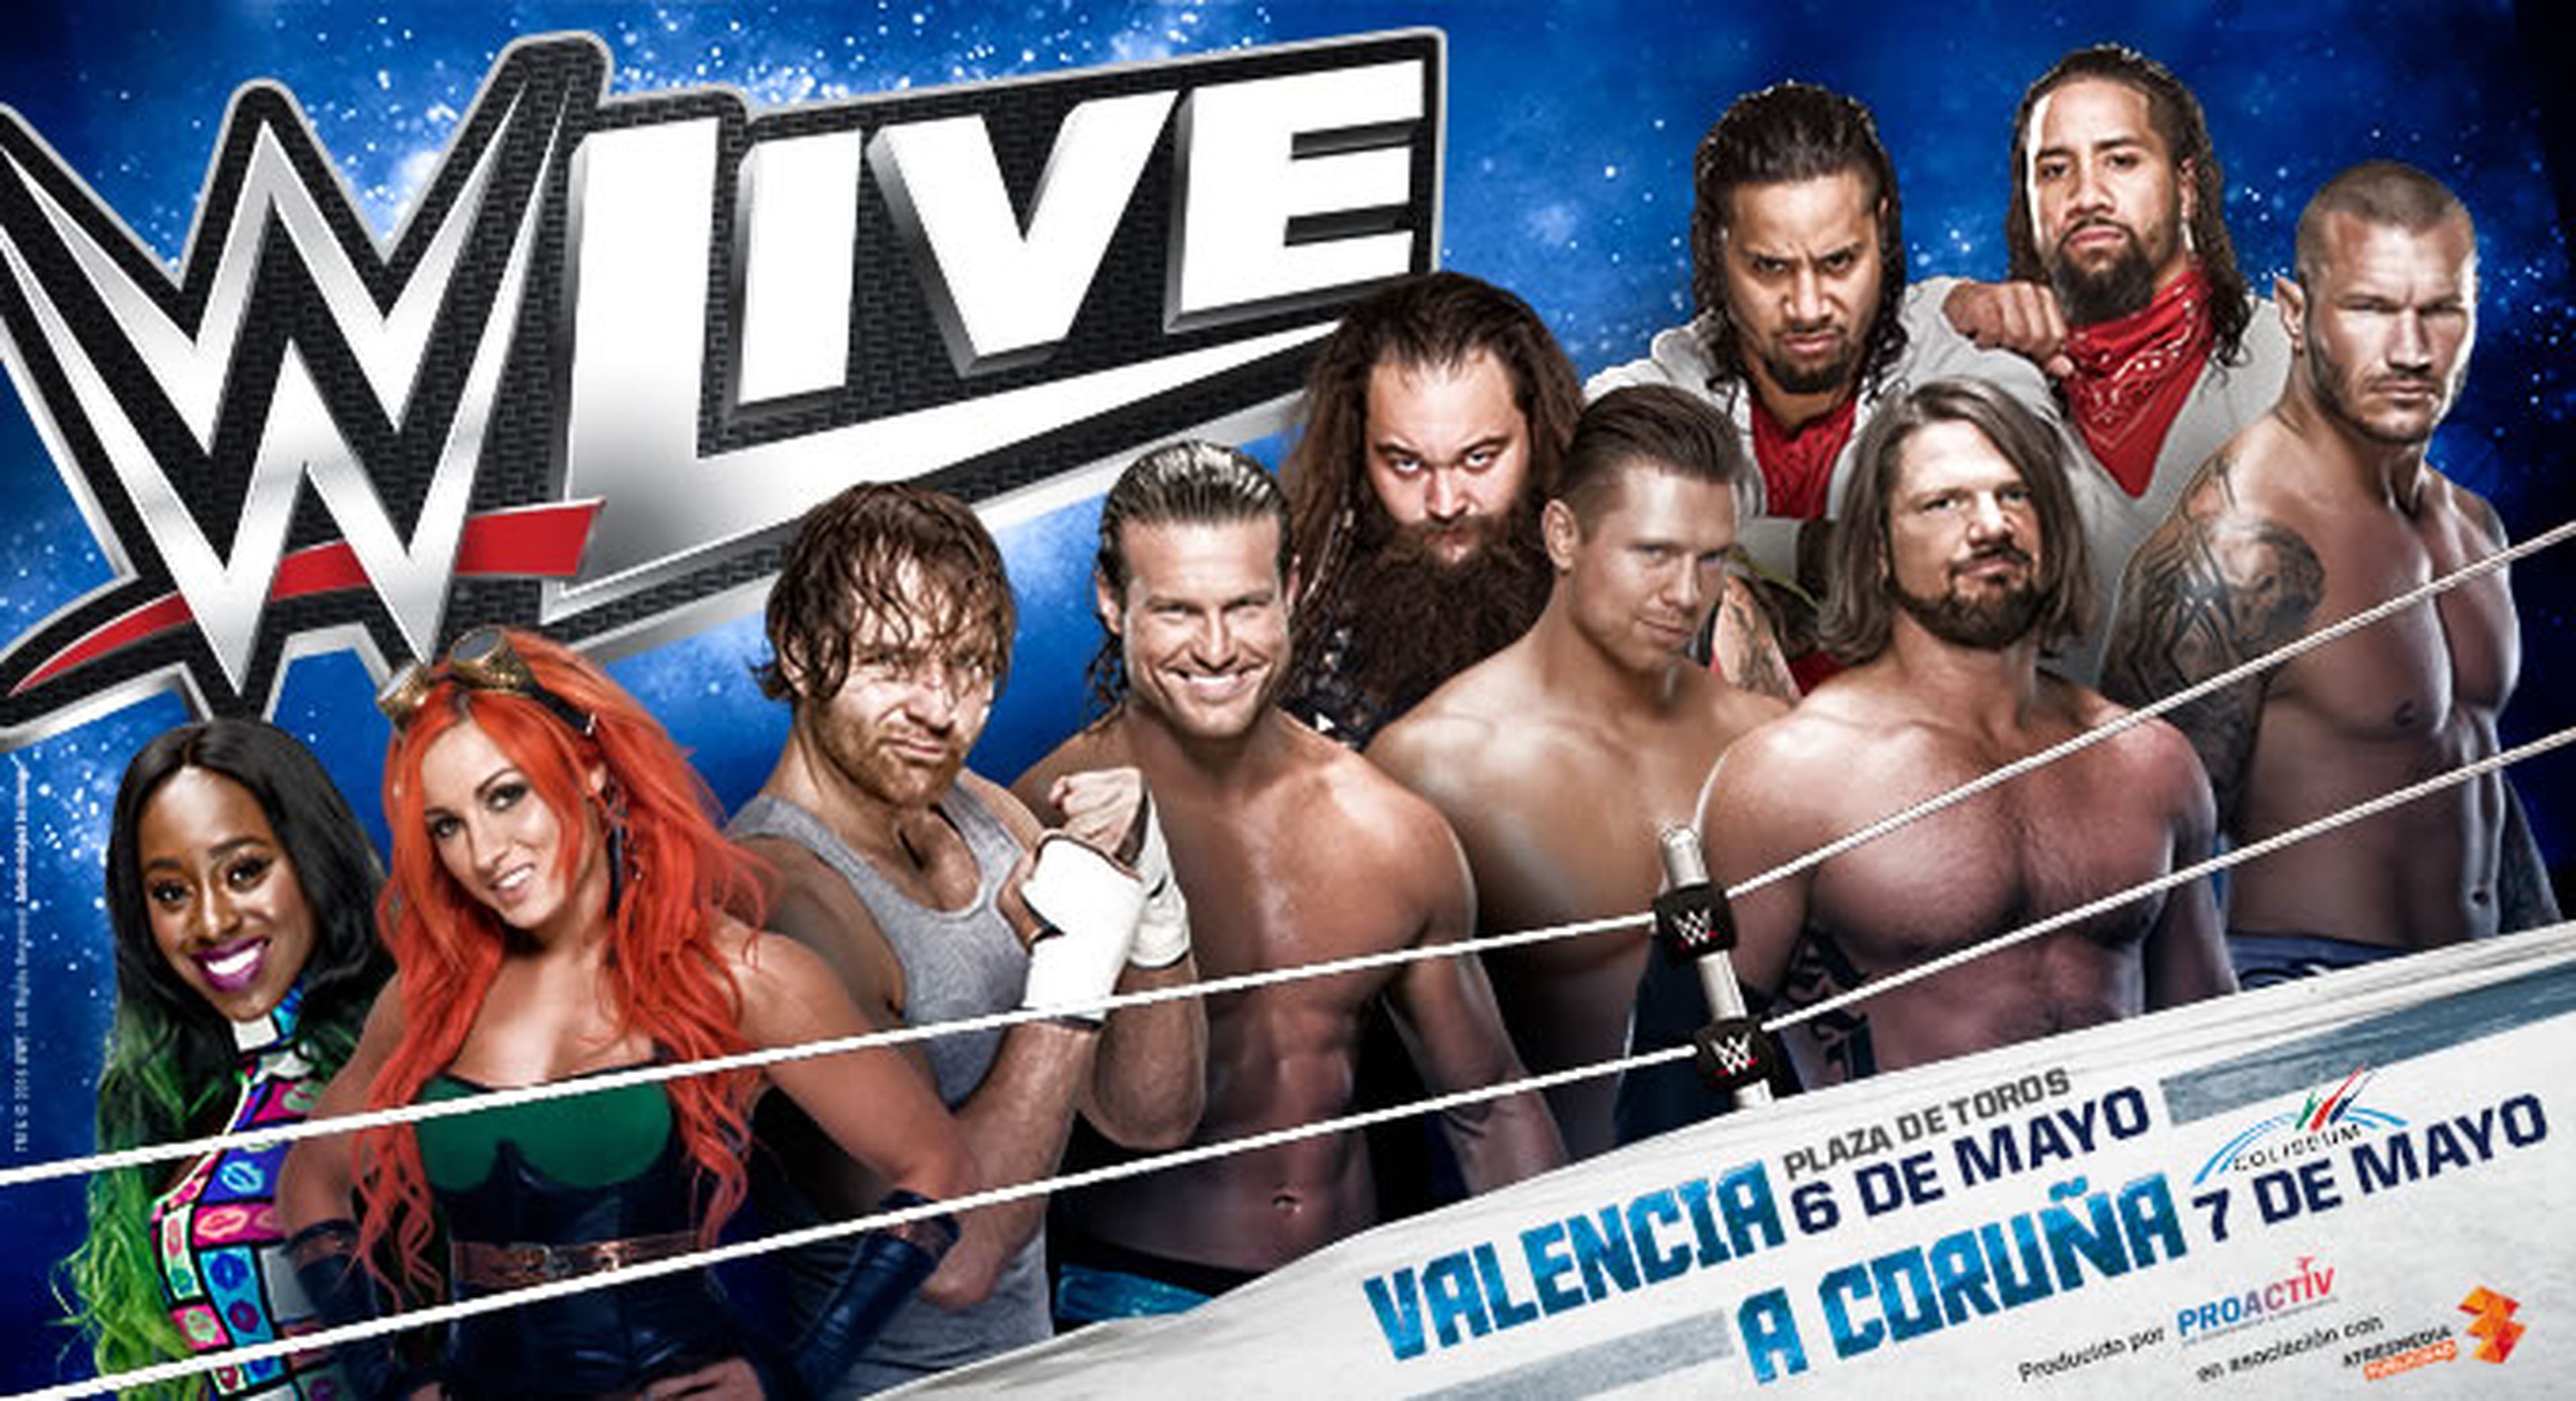 WWE España - Valencia y A Coruña